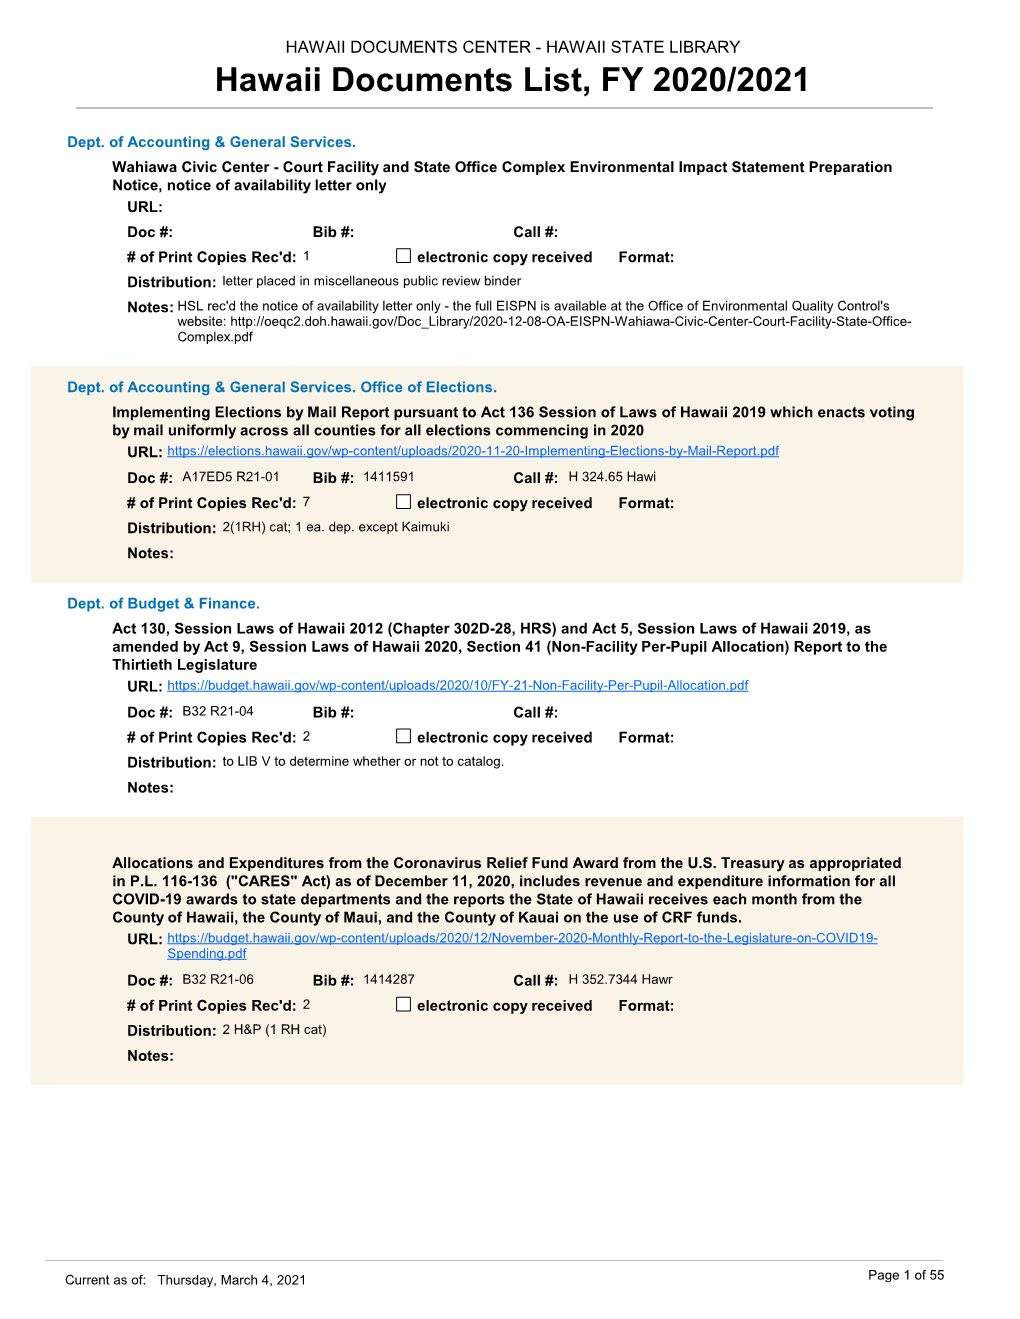 Hawaii Documents List, FY 2020/2021